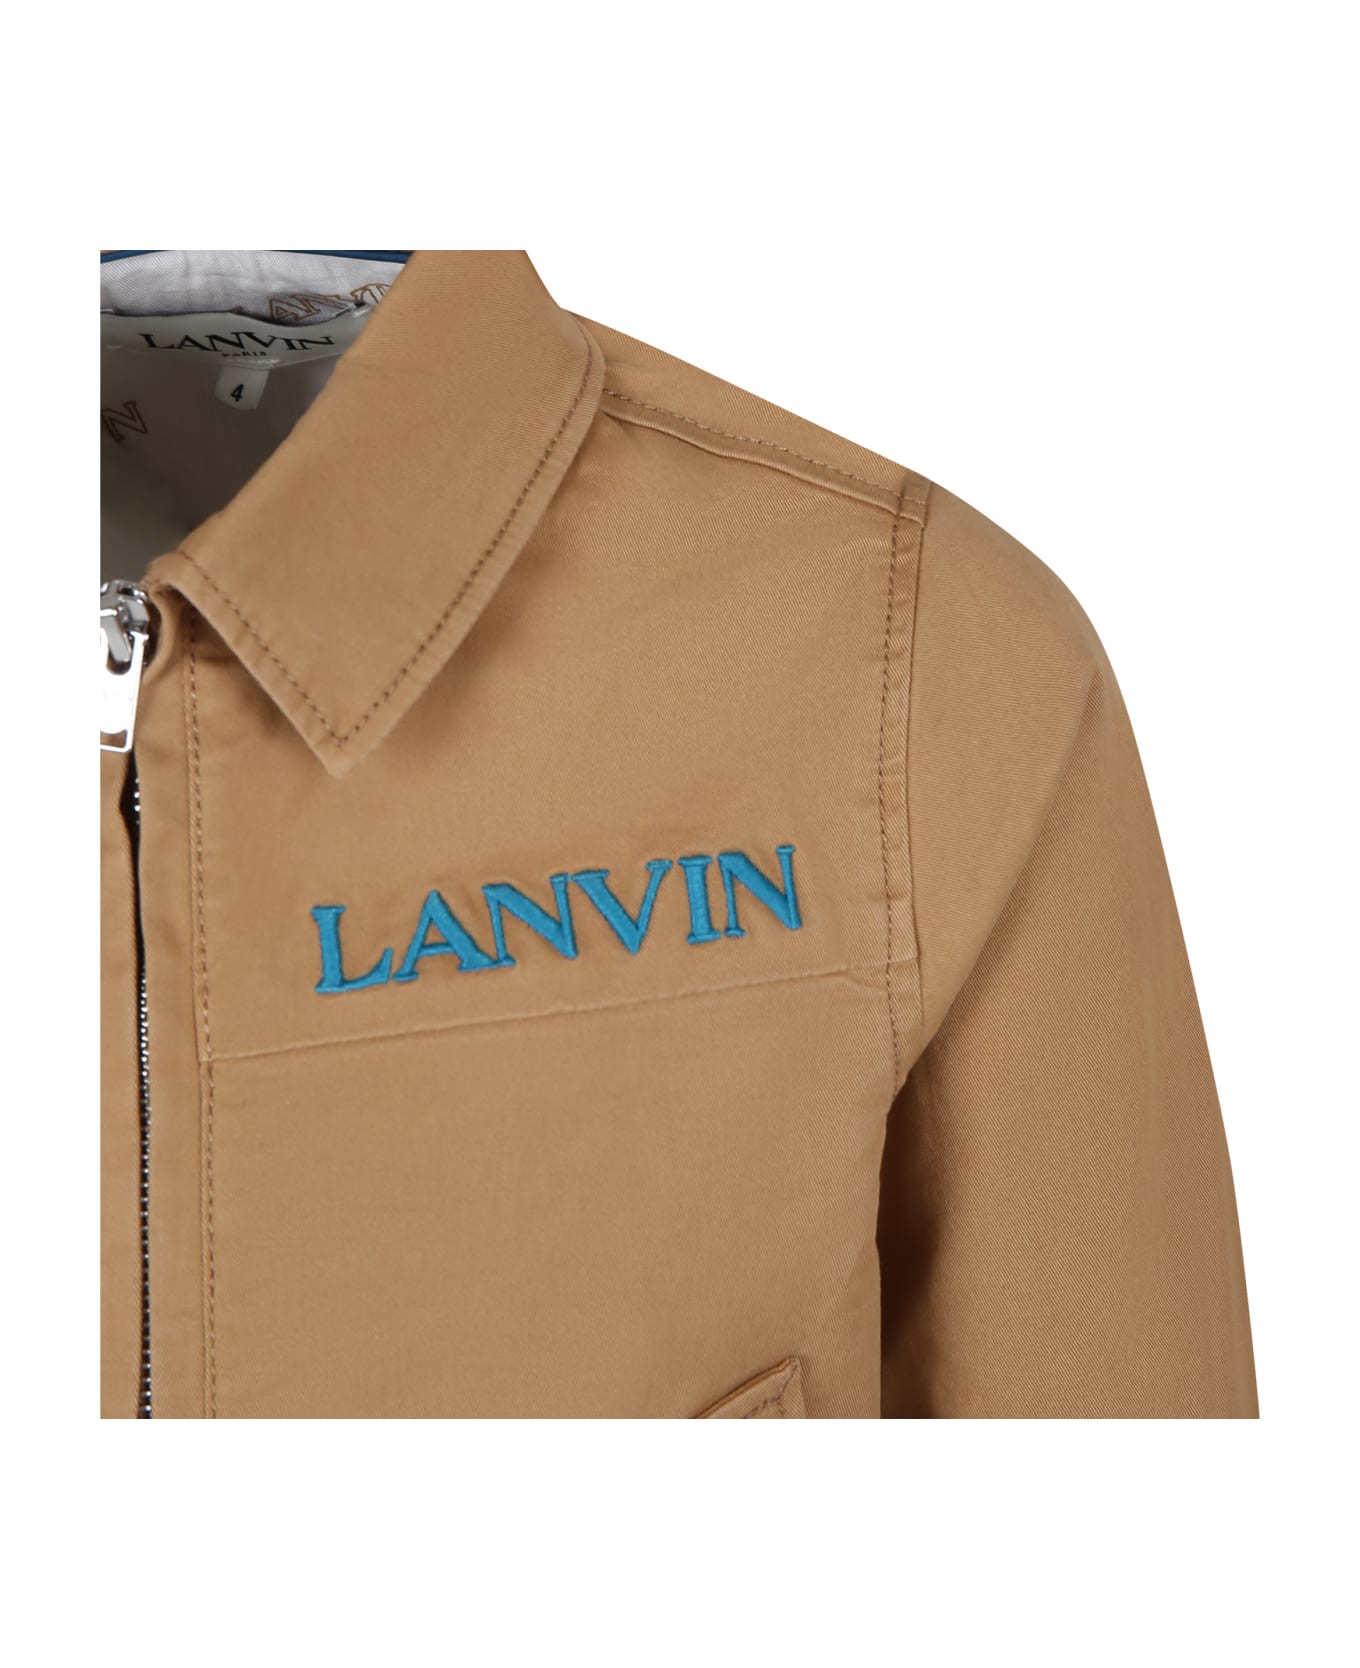 Lanvin Beige Jacket For Boy With Logo - Beige